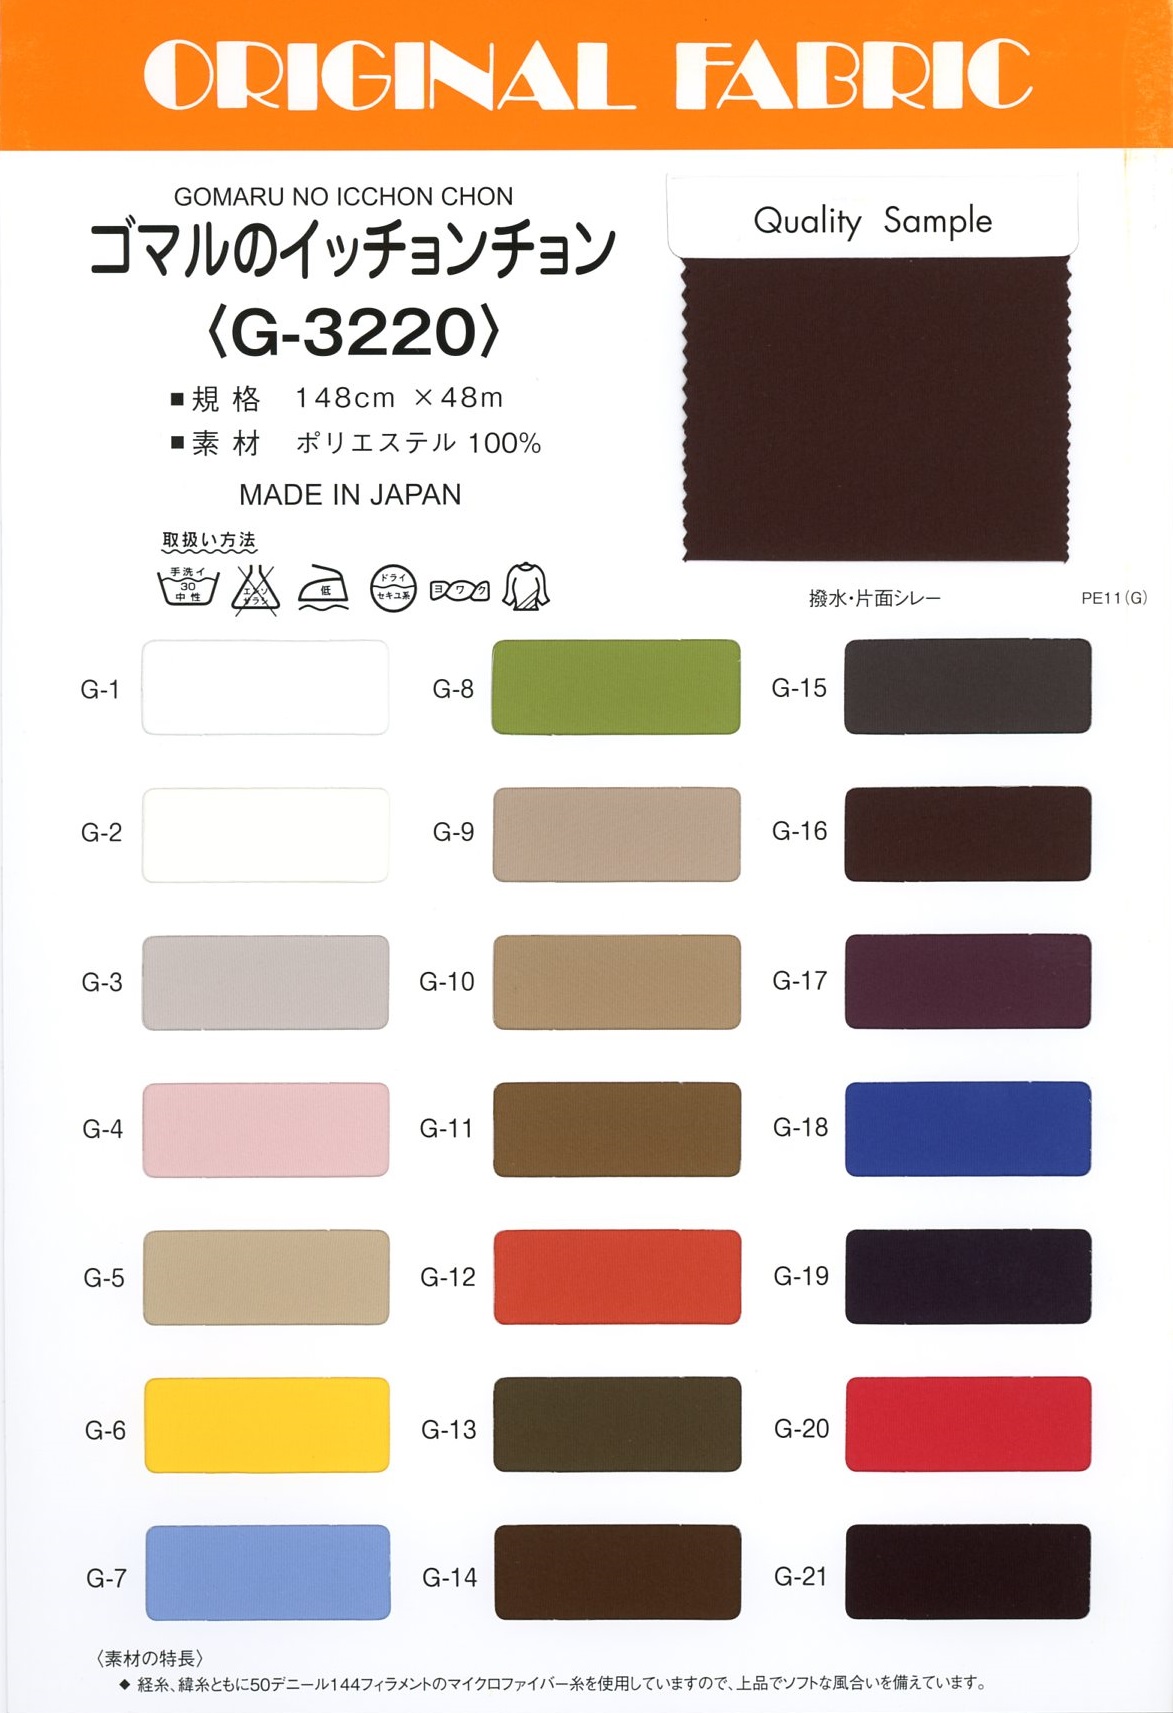 G-3220 Le Chonchon De Gomaru[Fabrication De Textile] Masuda